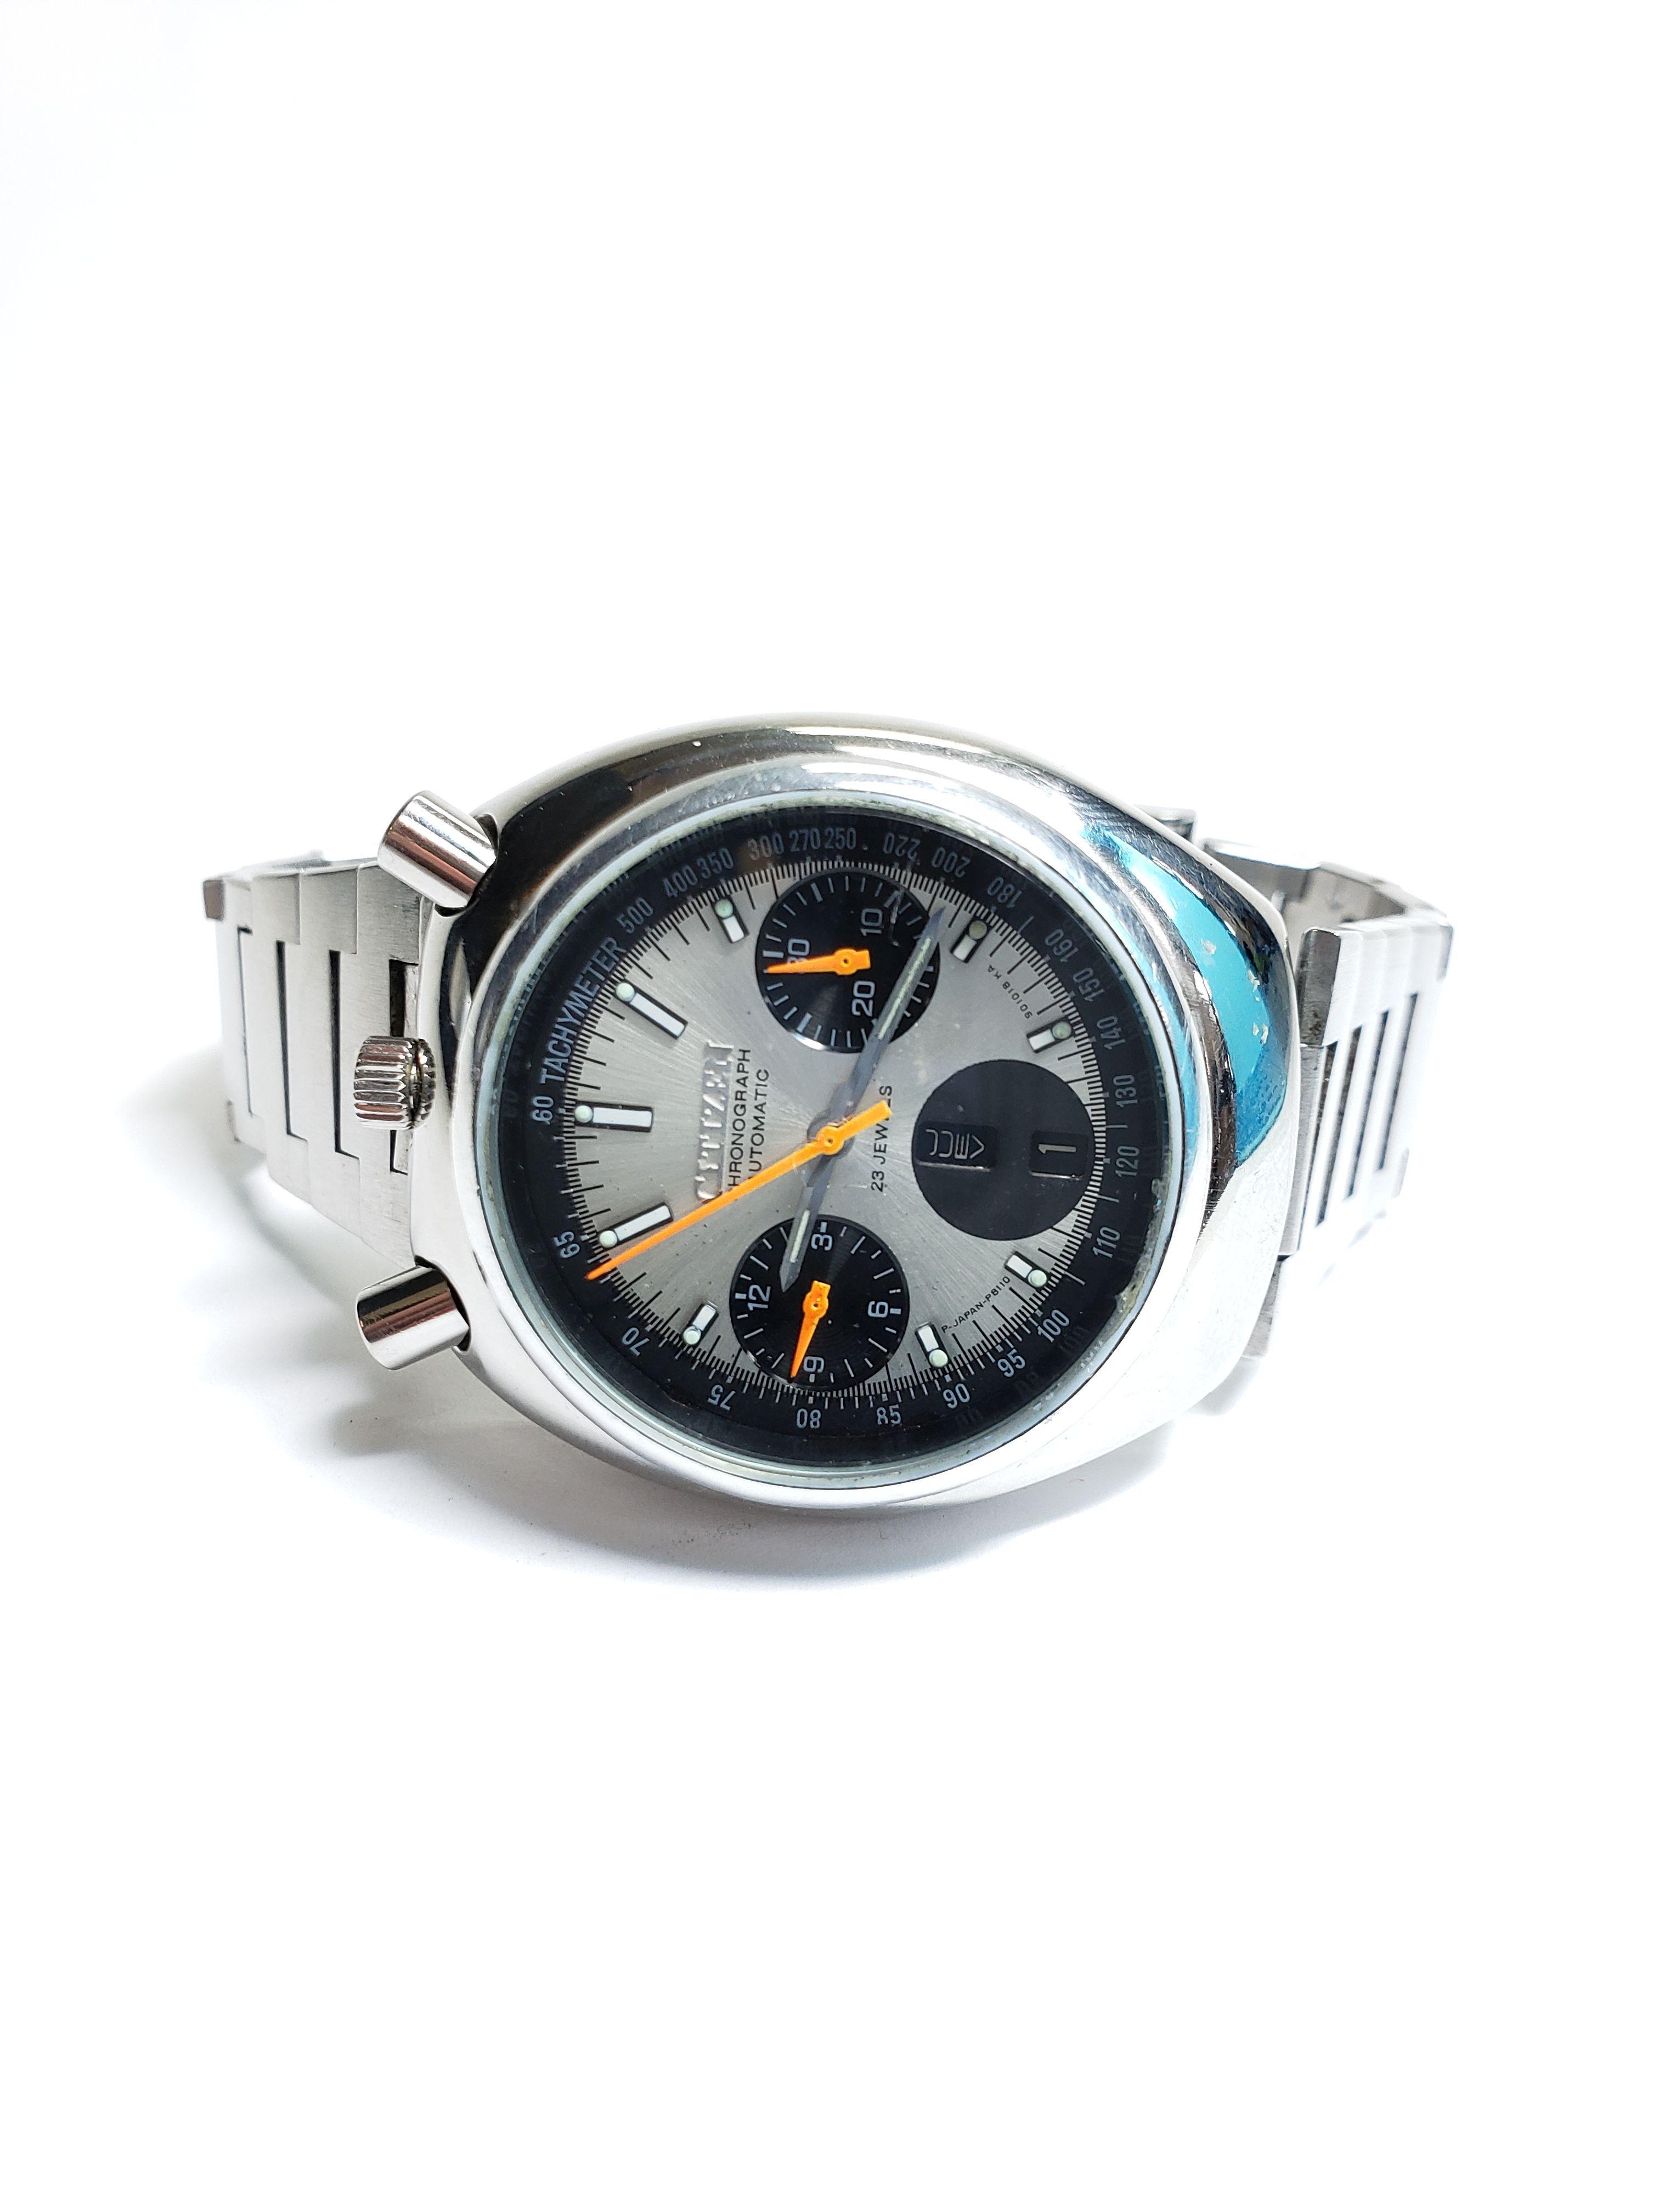 Rare Vintage Citizen BULLHEAD Automatic St. Steel Chrono Watch